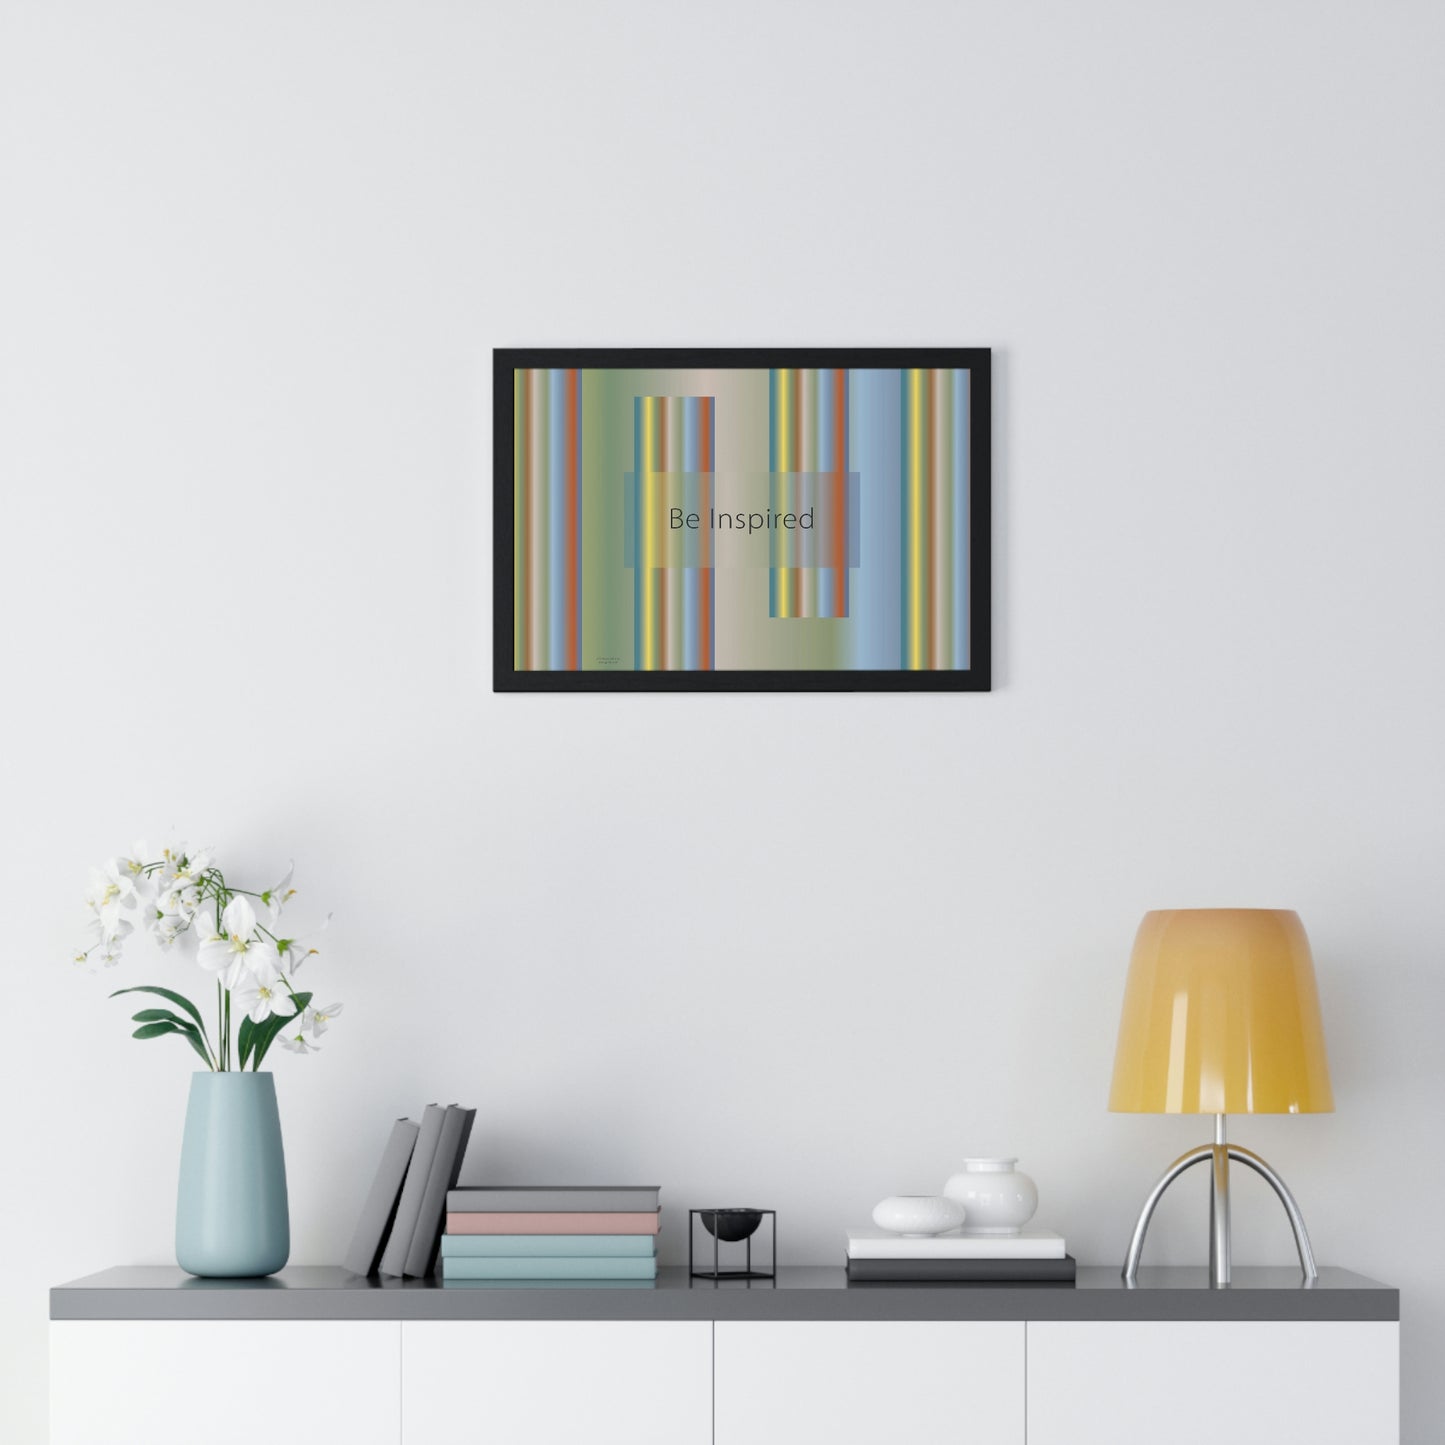 Premium Framed Horizontal Poster, 18“ × 12“ Be Inspired - Design No.200